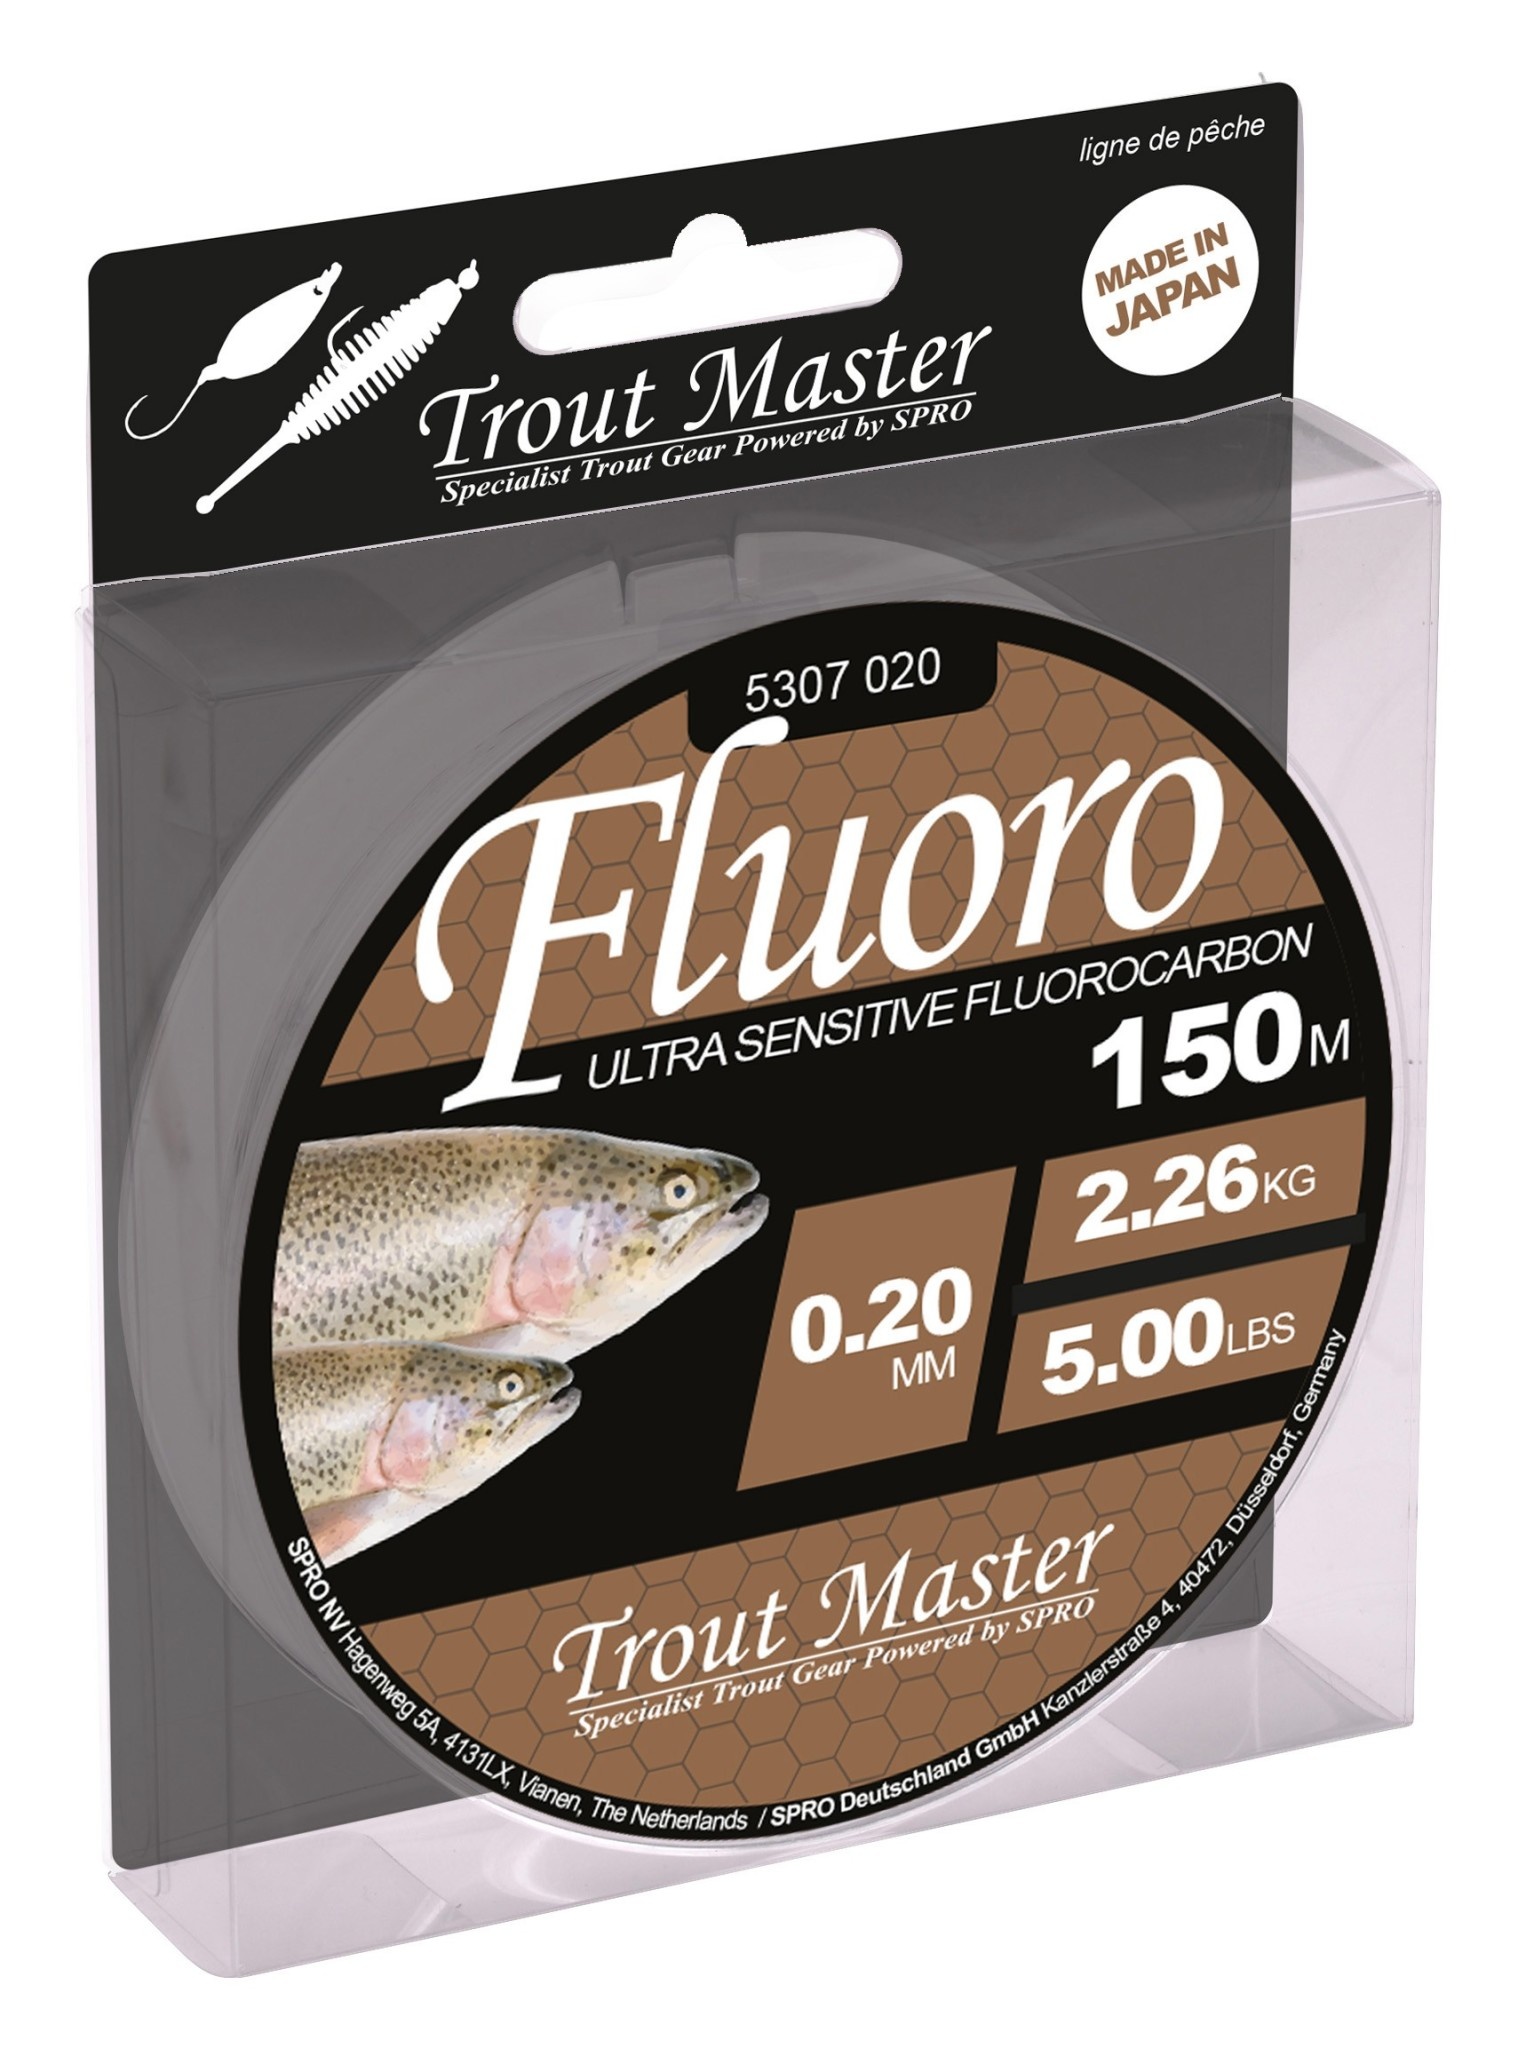 Betrouwbaar heb vertrouwen voorstel Trout Master Fluoro Ultra Sensitive Fluorocarbon 150m - Reniers Fishing